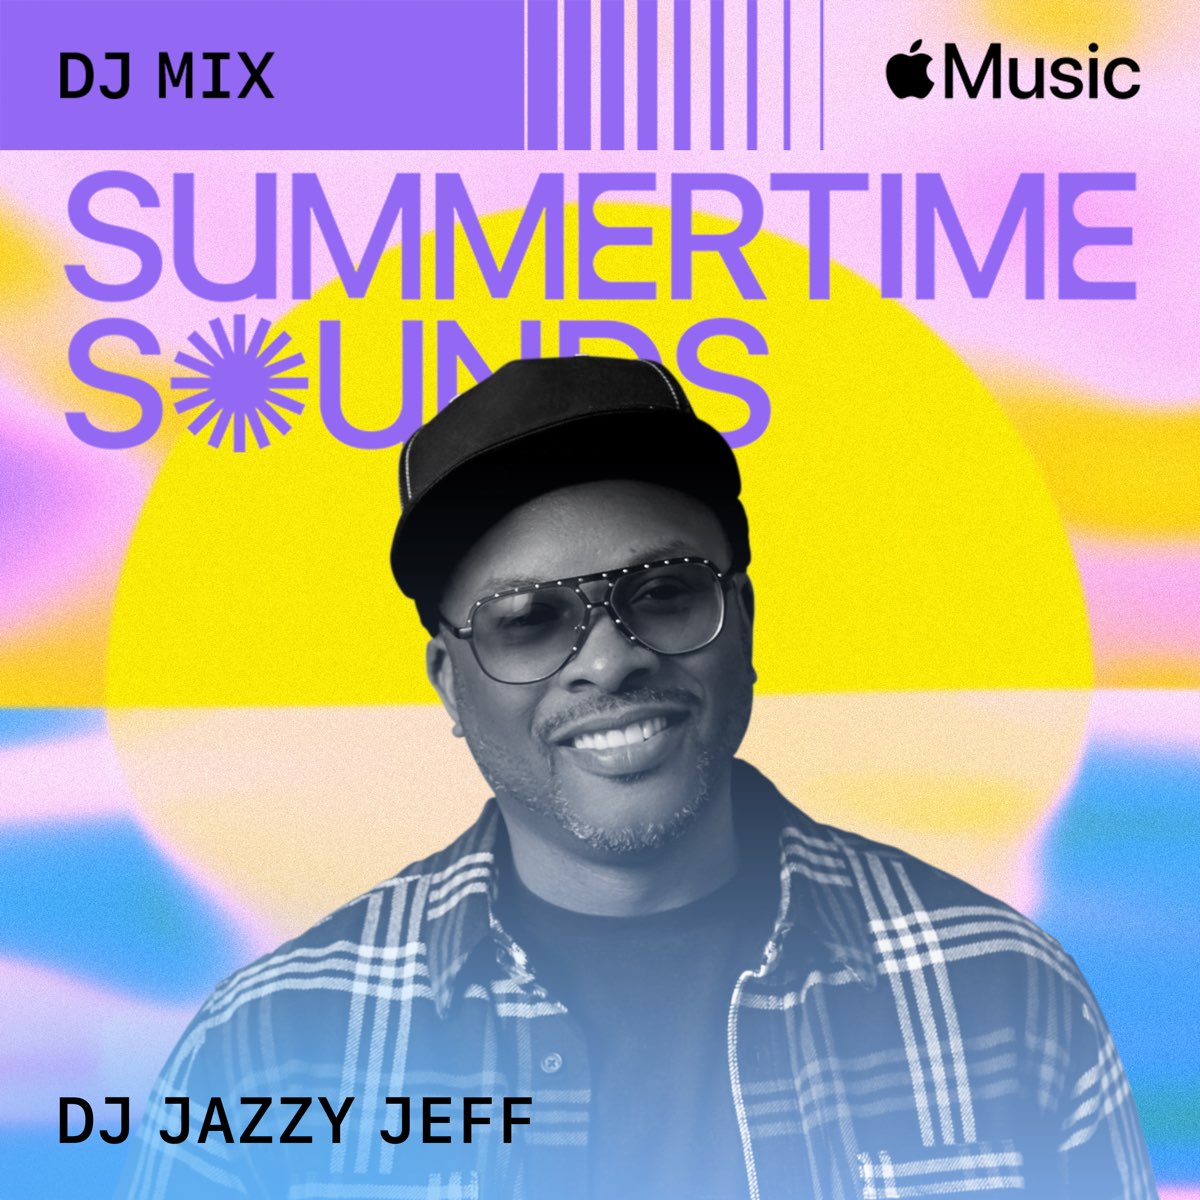 ‎Summertime Sounds 2022 (DJ Mix) by DJ Jazzy Jeff on Apple Music